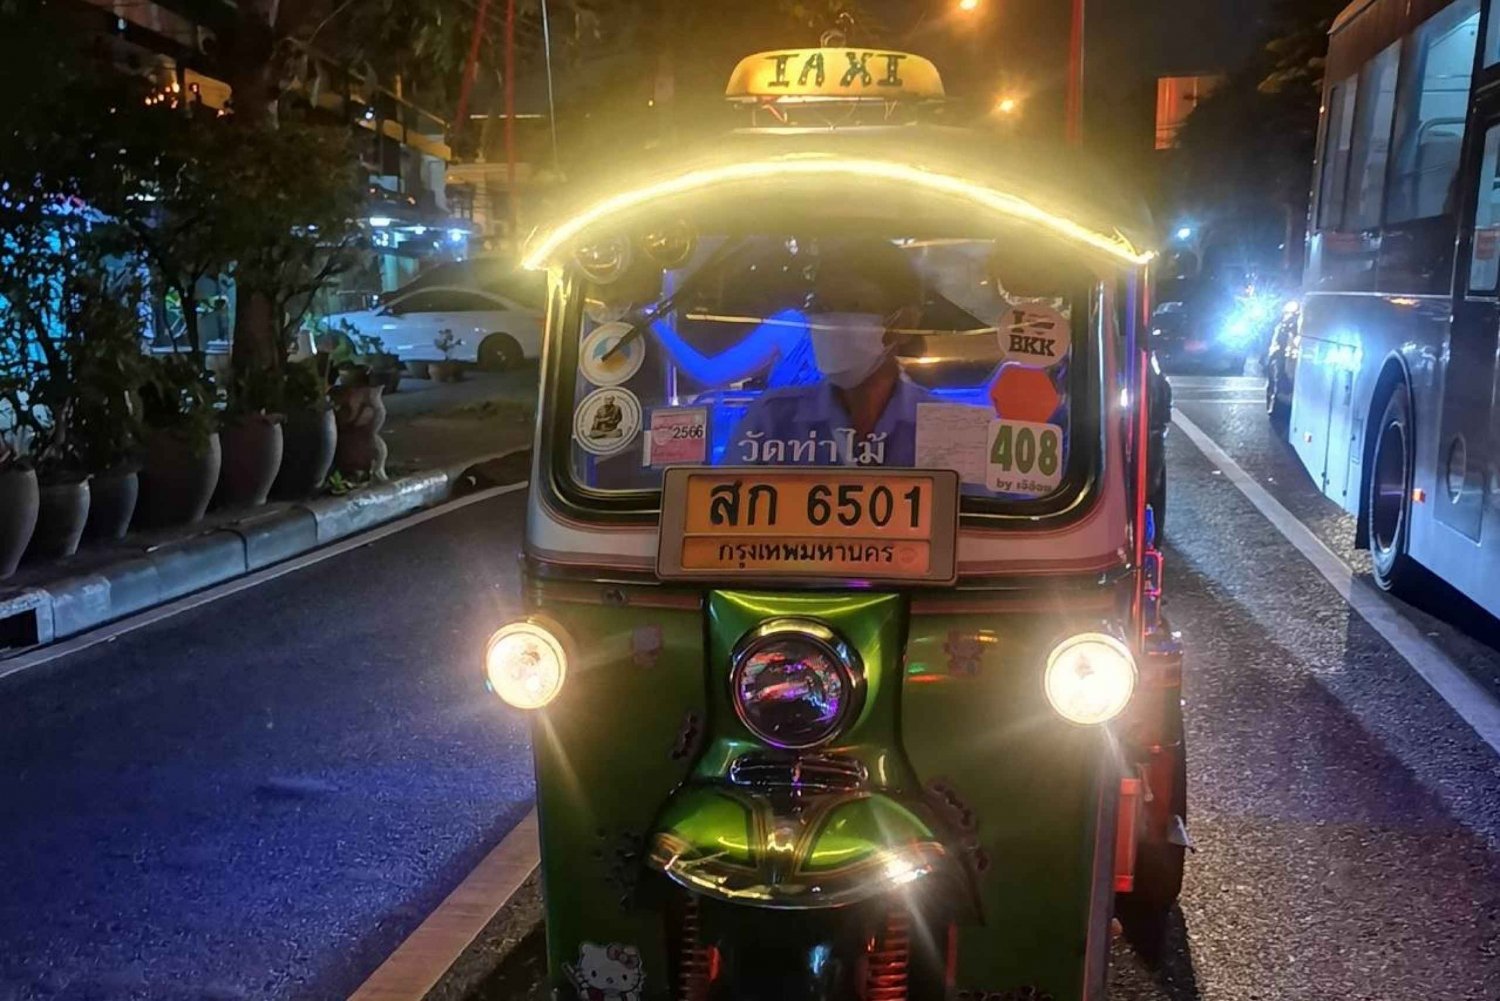 Bangkok: Wycieczka kulinarna Tuk Tuk nocą po Starym Mieście